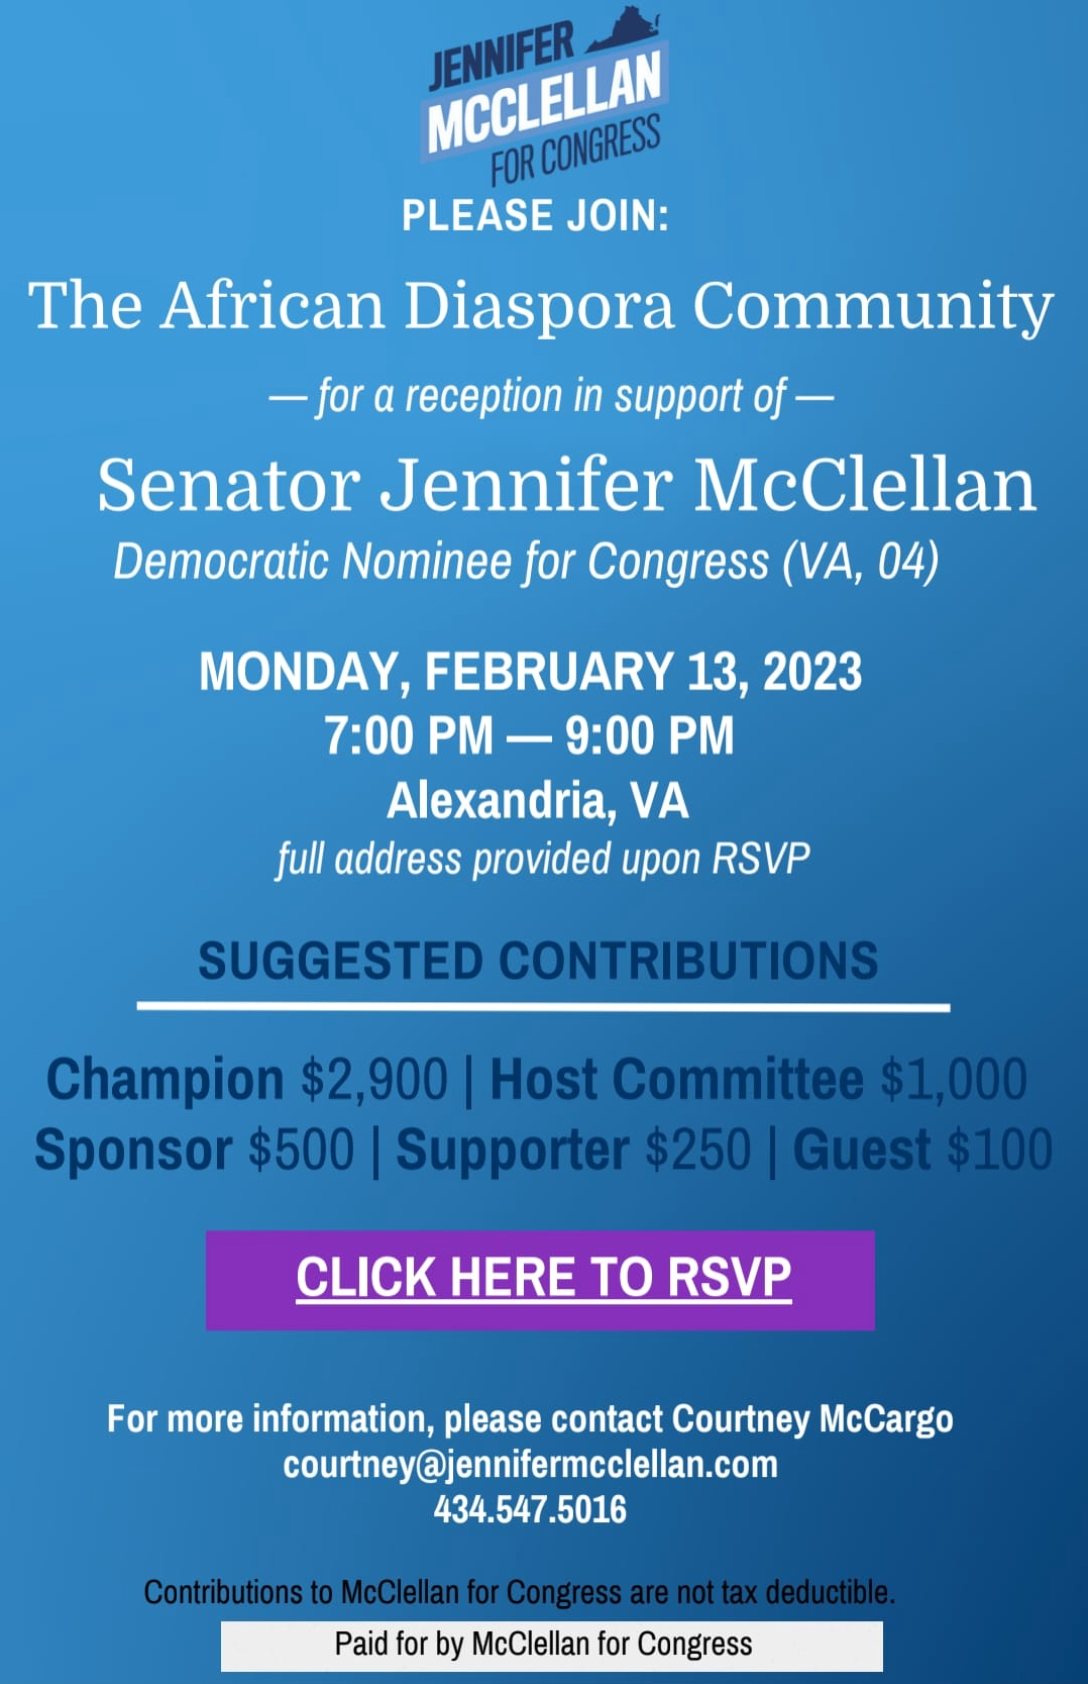 African Diaspora Community for a Fundraiser supporting Jennifer McClellan for Congress